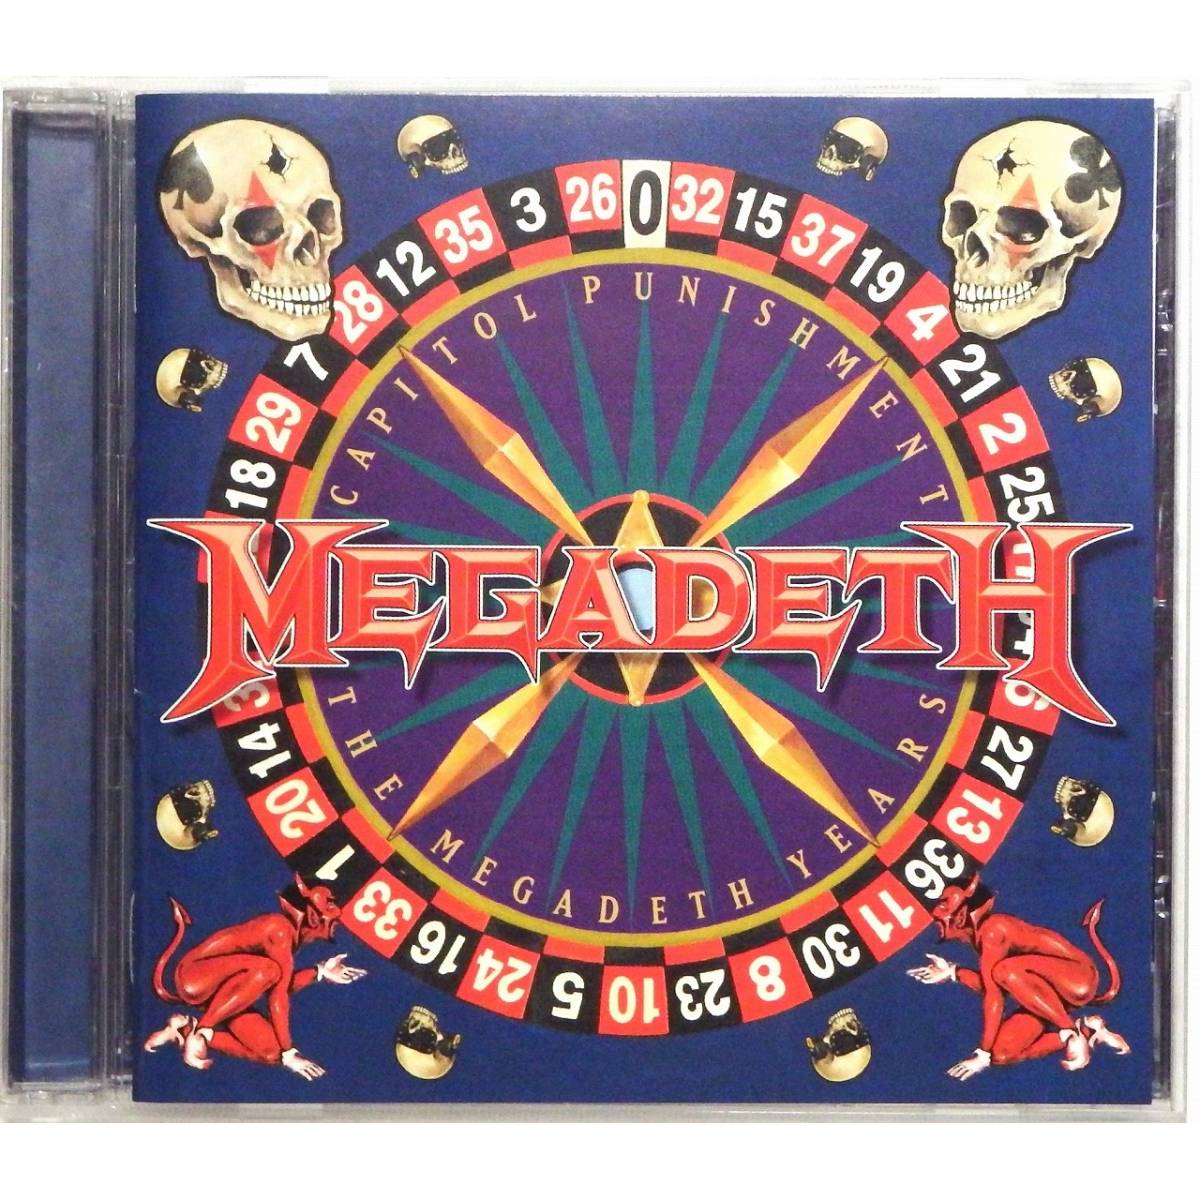 Megadeth / Capitol Punishment The Megadeth Years ◇  mega  ... / ... *  ... ... *   mega  ... *  ... ◇  японское издание  ◇